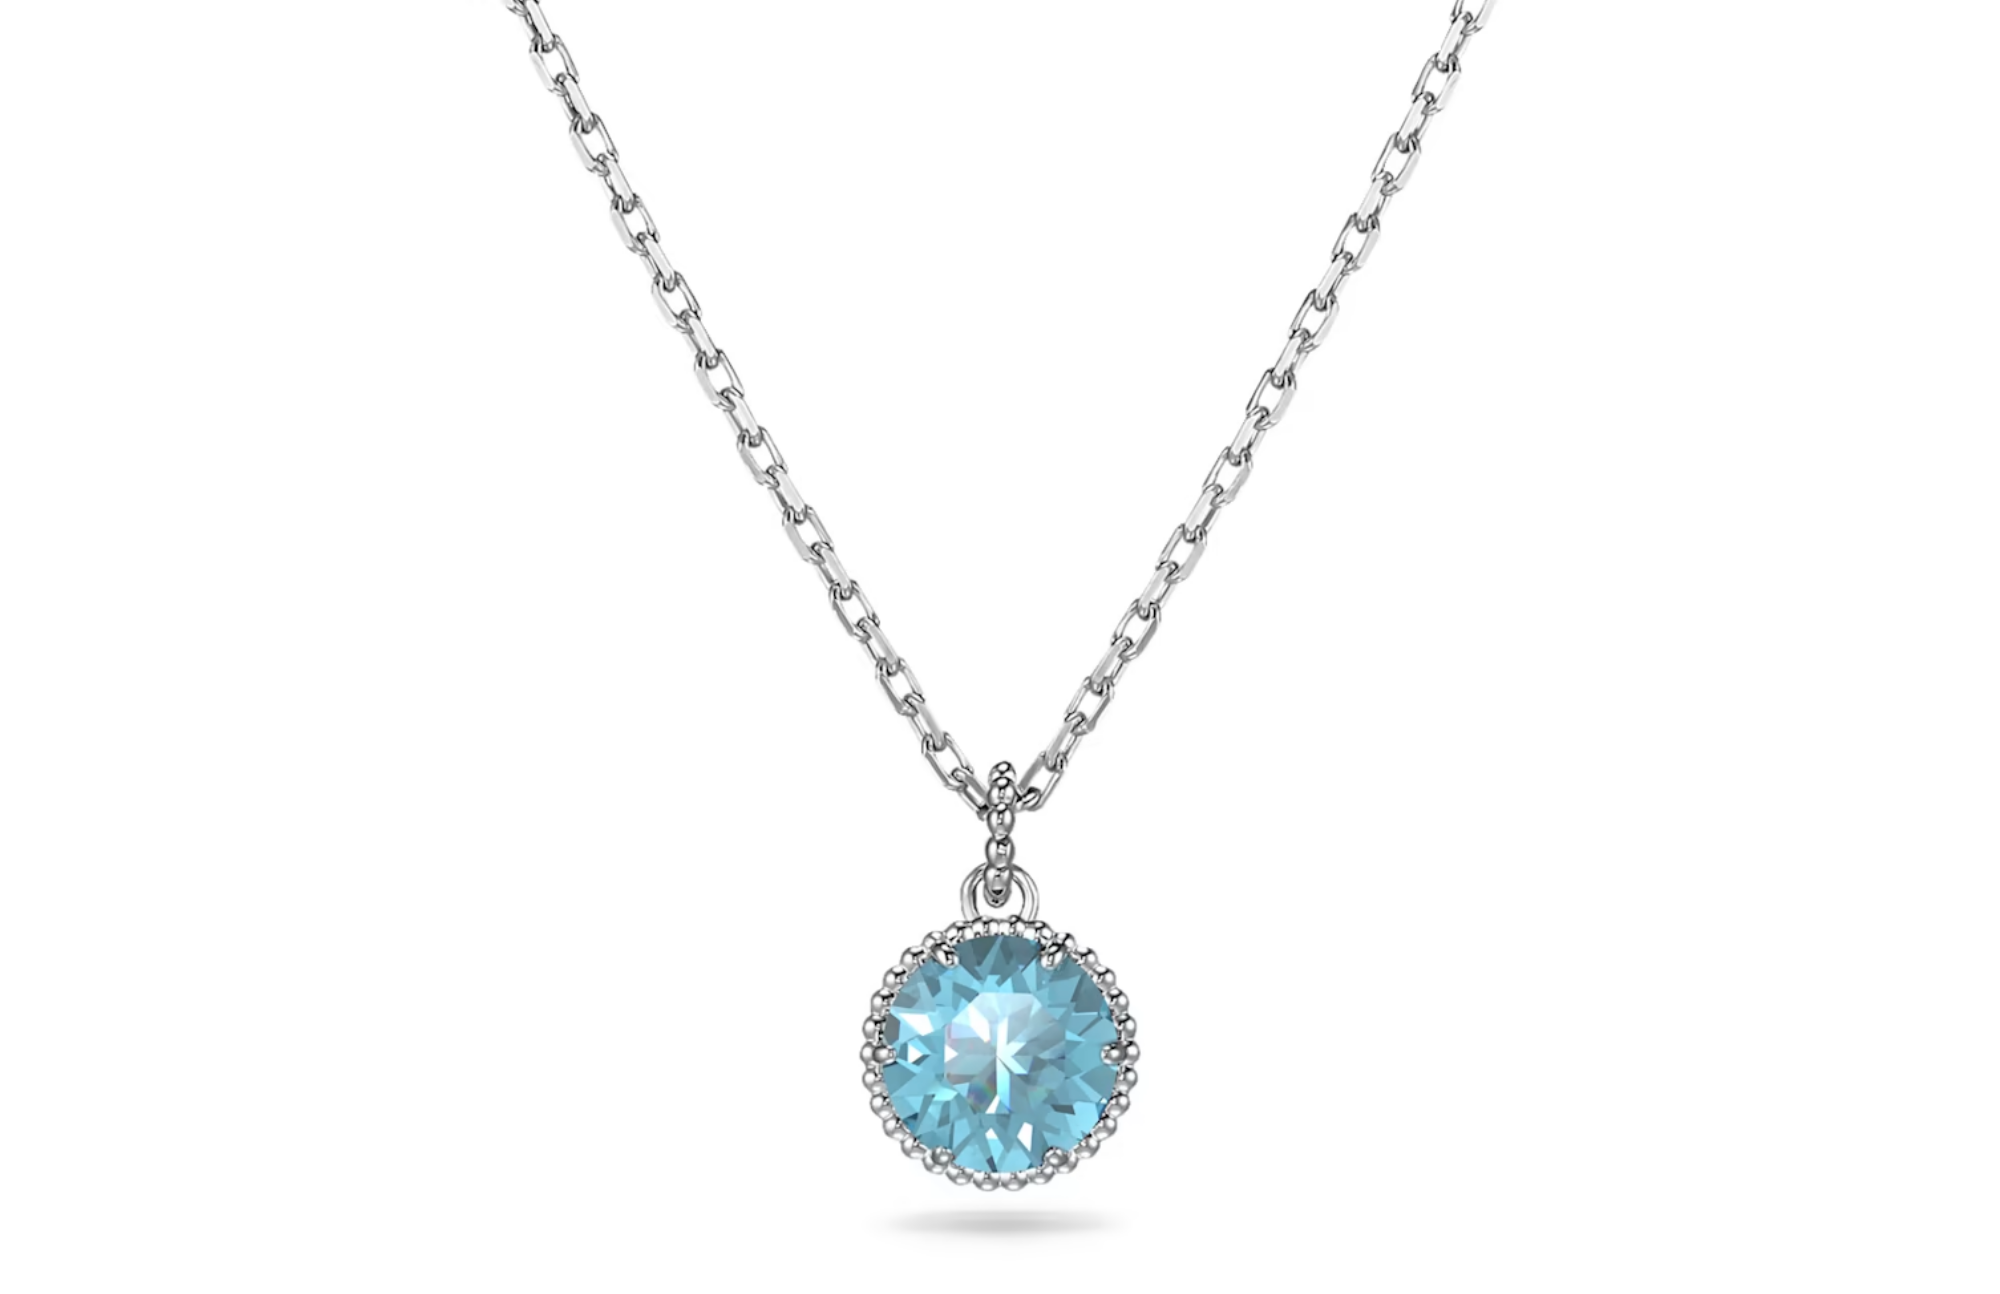 Swarovski pendant in rhodium plating and has a single large aquamarine crystal